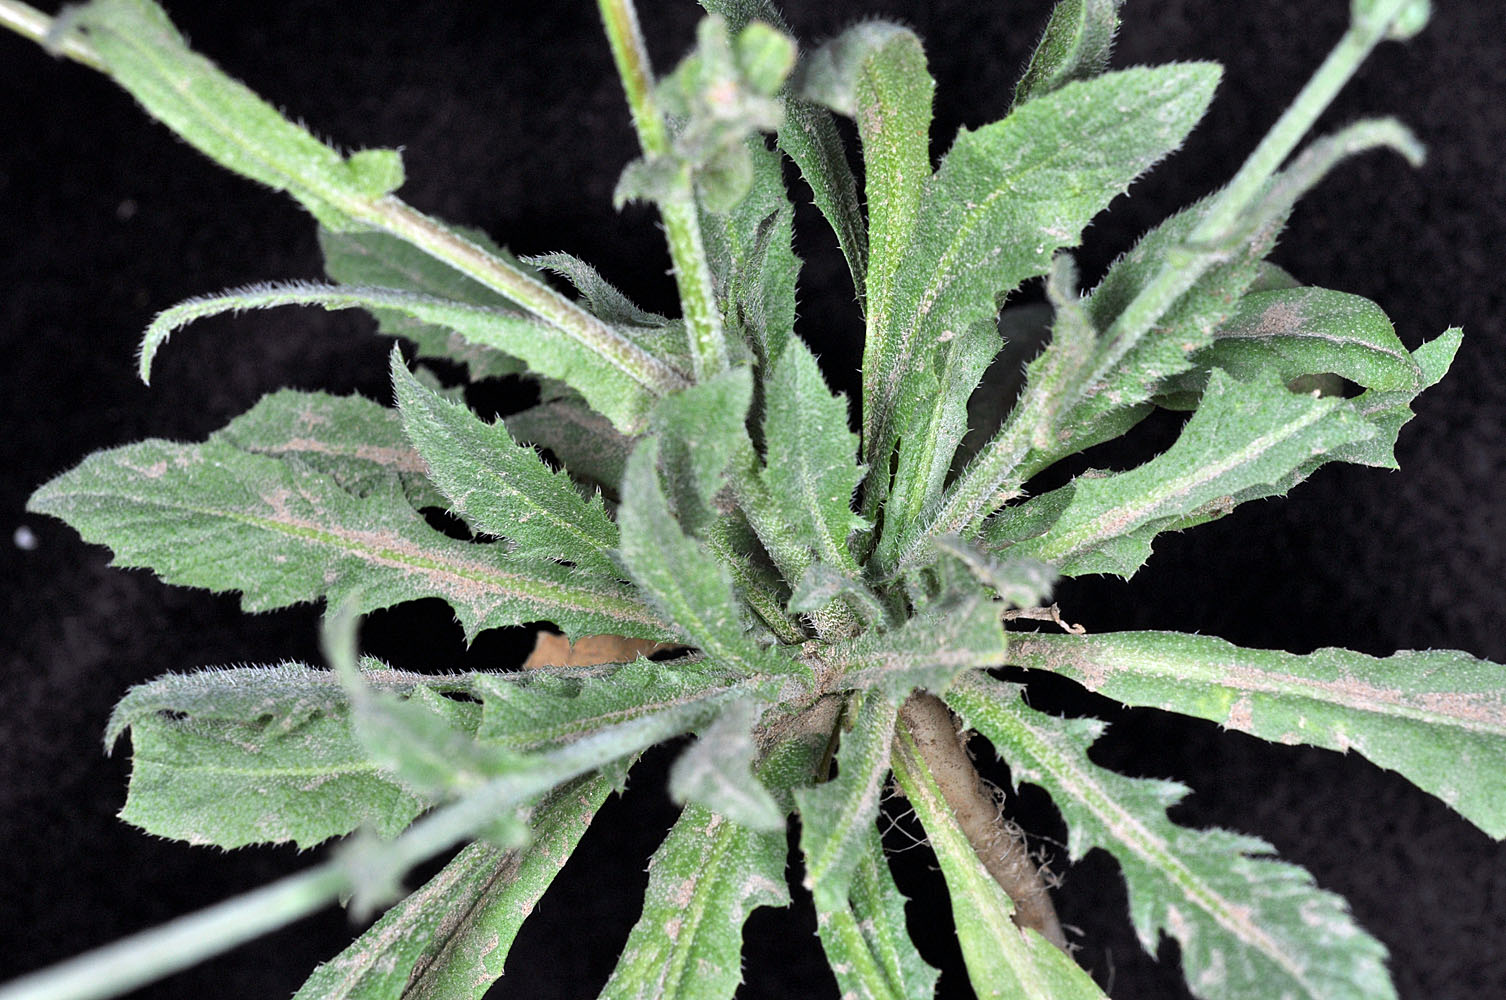 Flora of Eastern Washington Image: Capsella bursa-pastoris